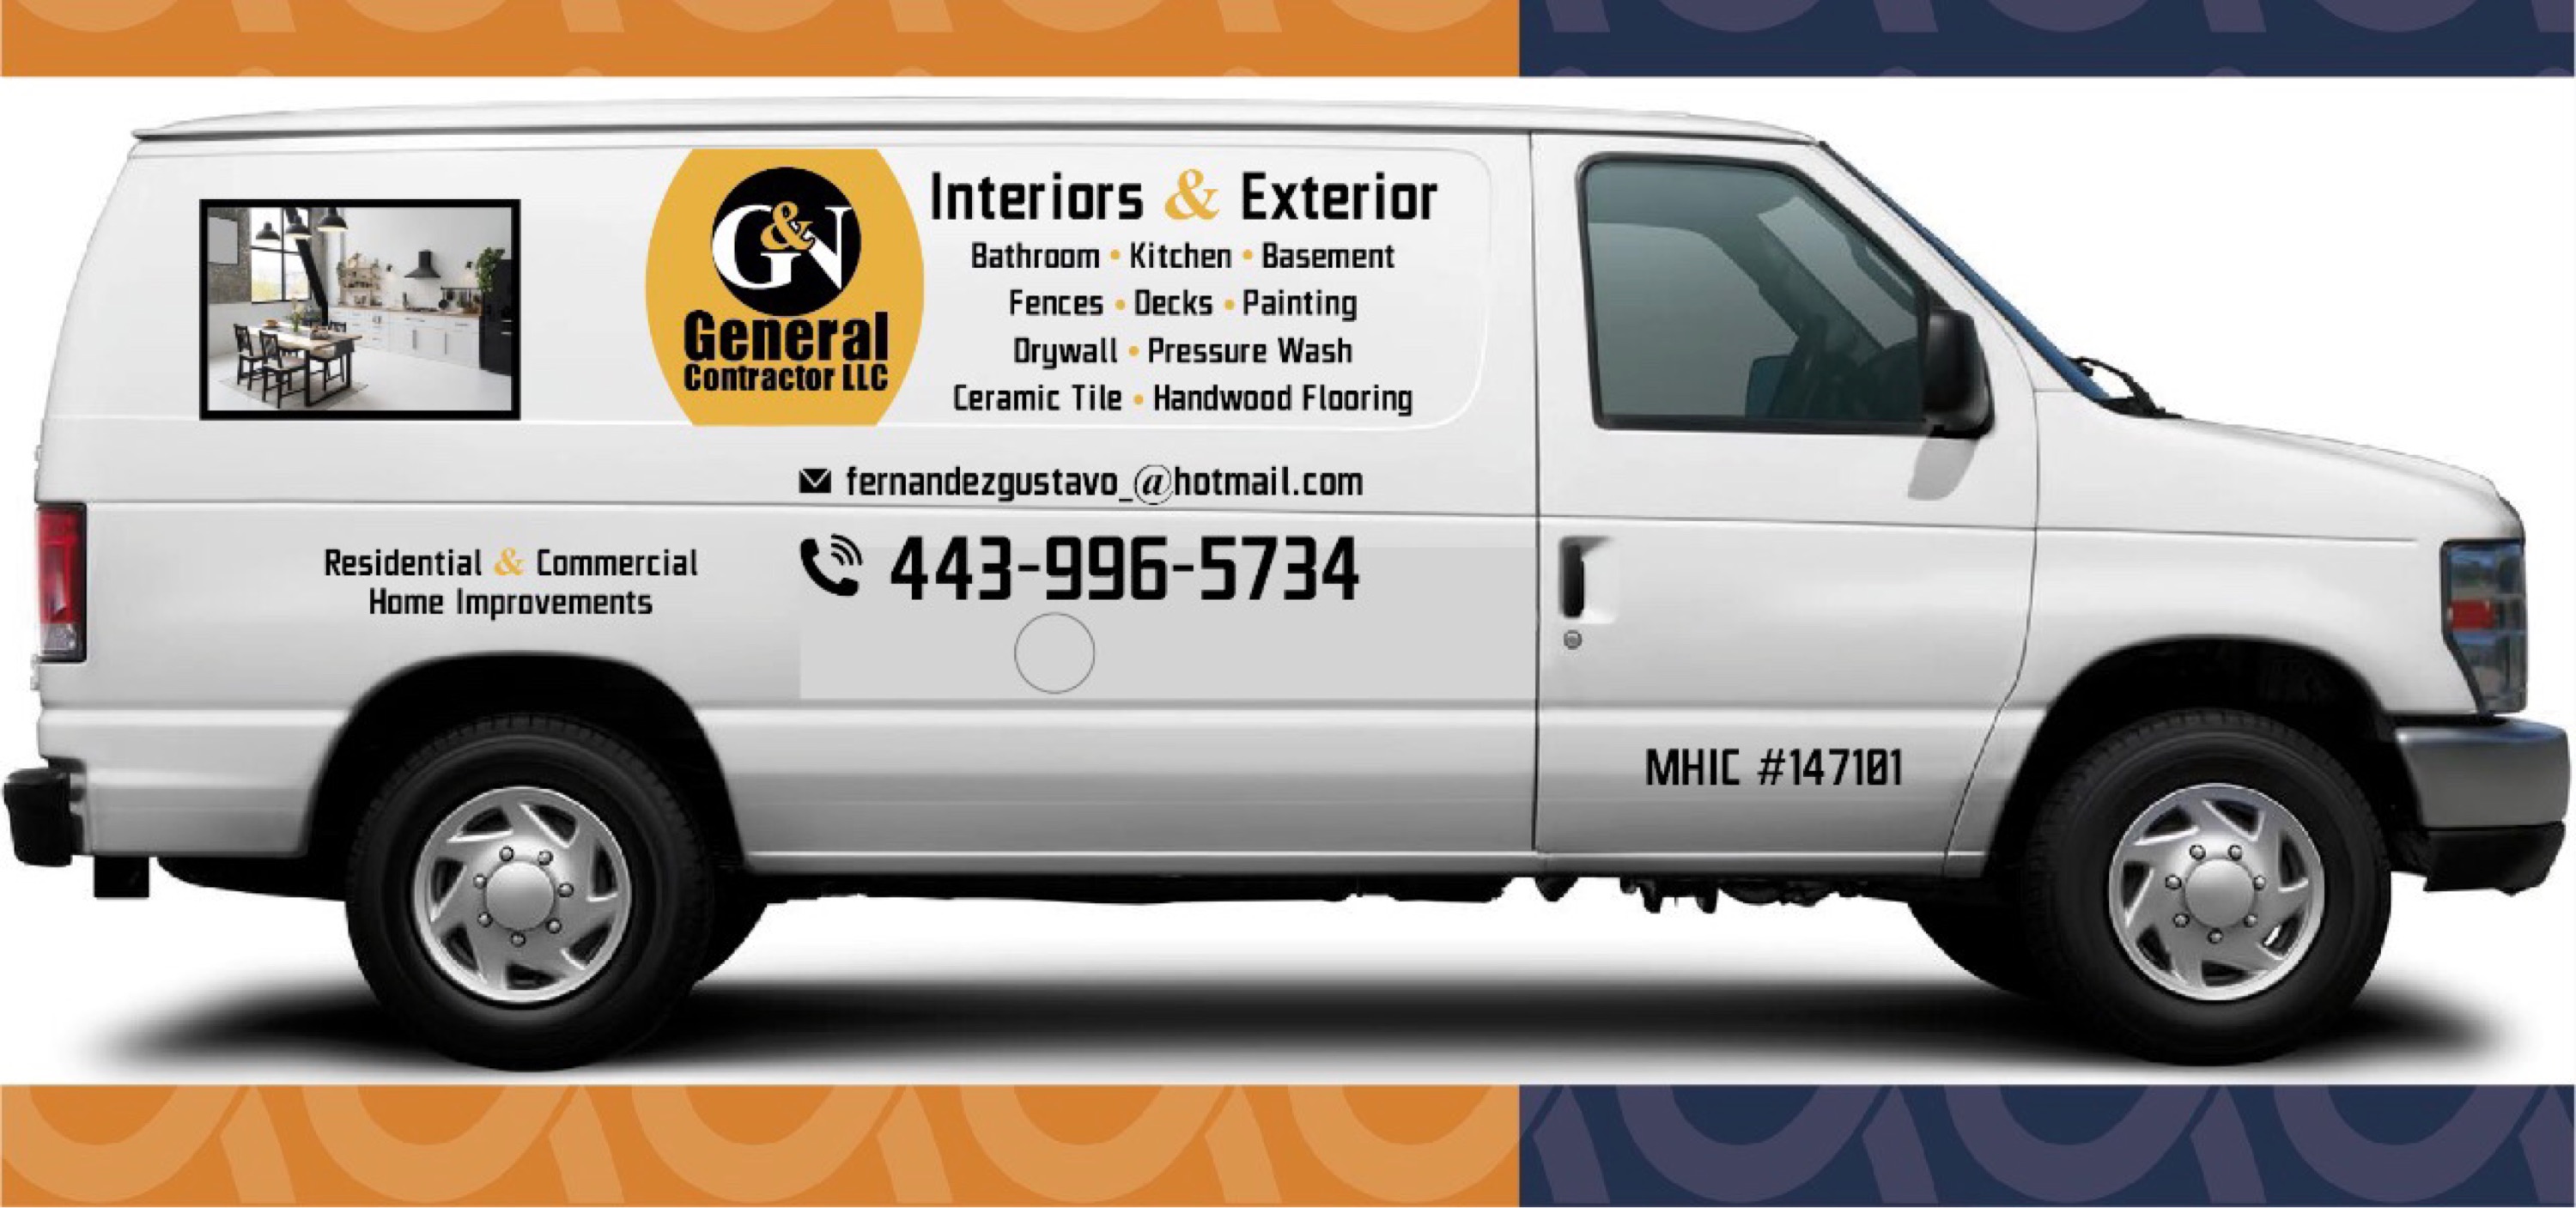 G & N General Contractor, LLC Logo